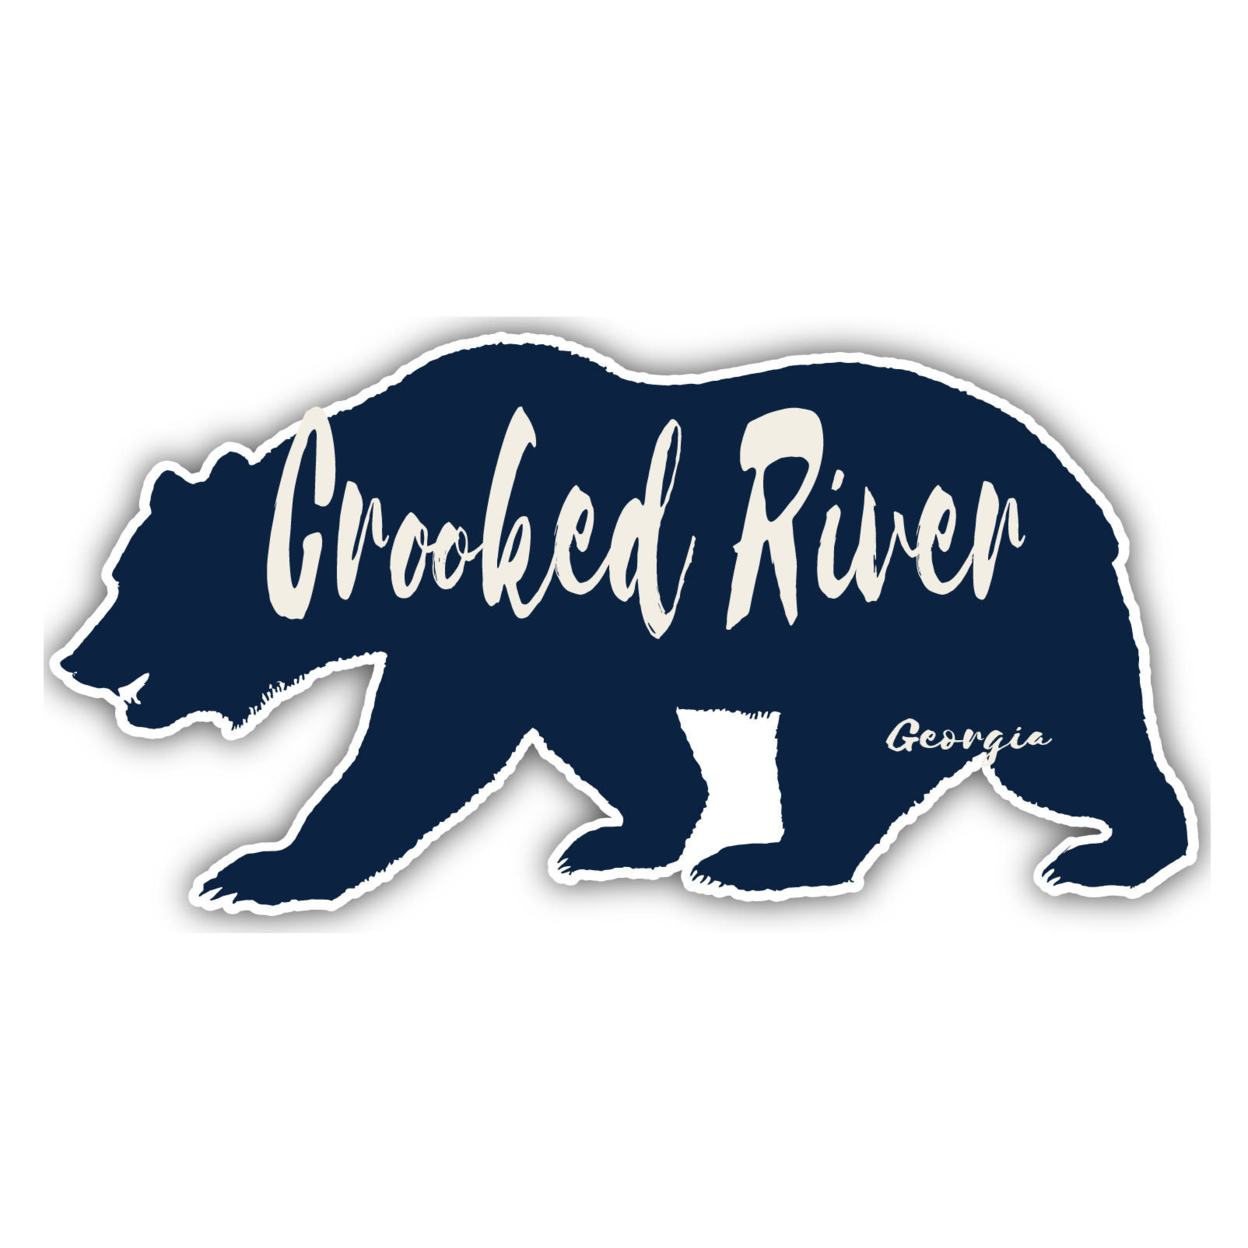 Crooked River Georgia Souvenir Decorative Stickers (Choose Theme And Size) - Single Unit, 10-Inch, Bear